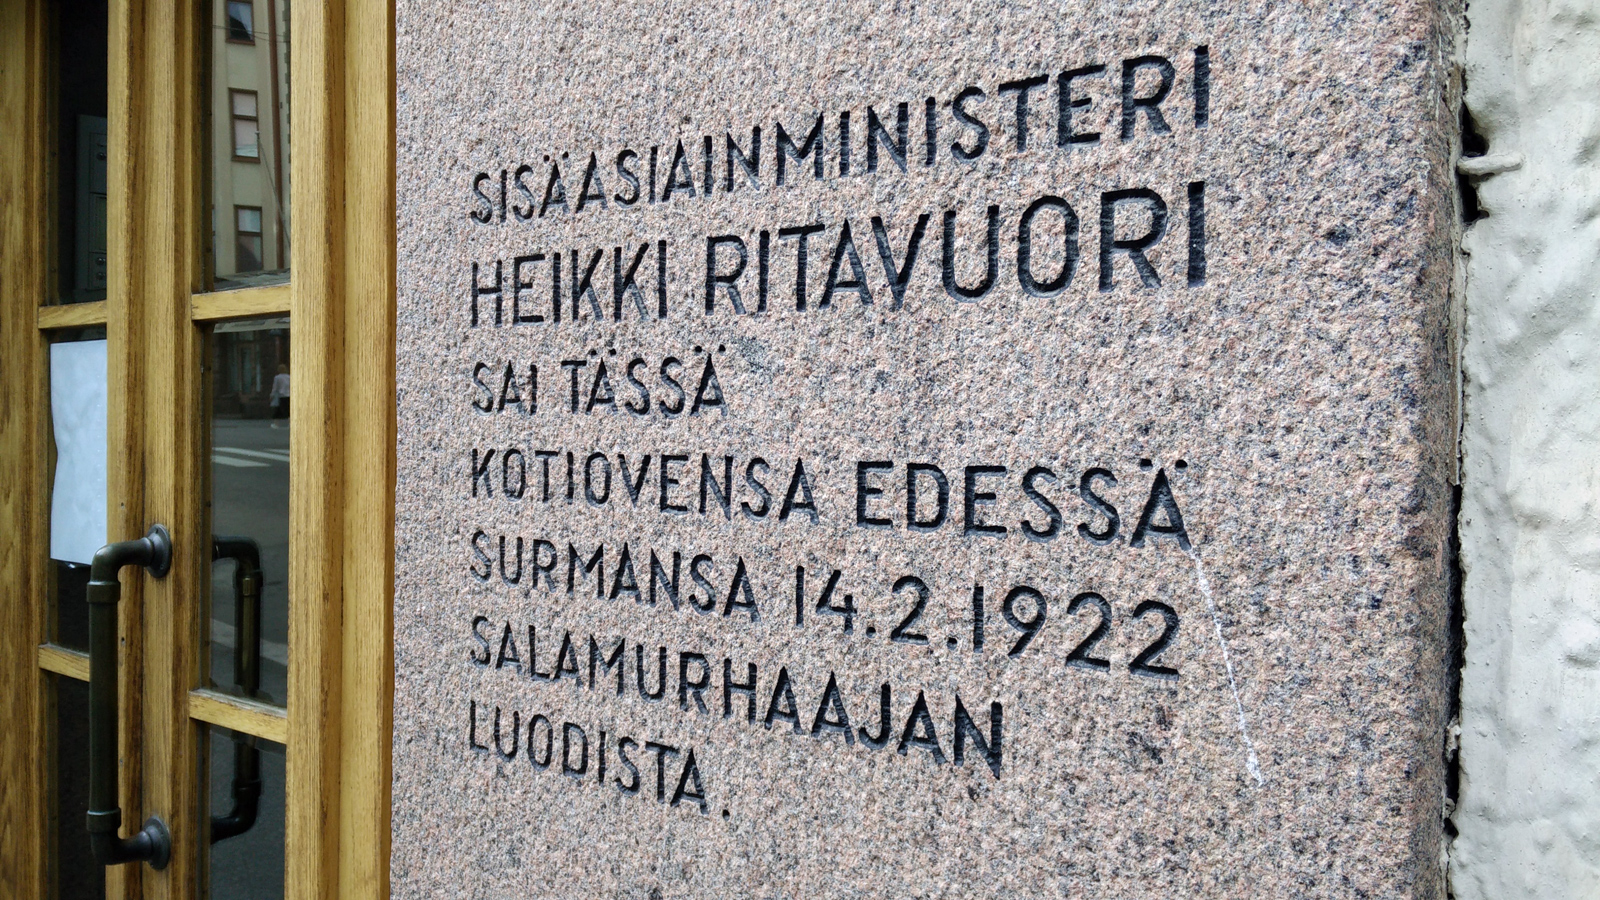 December 8, 2002. Minister of the Interior of Finland Heikki Ritavuori's murder scene